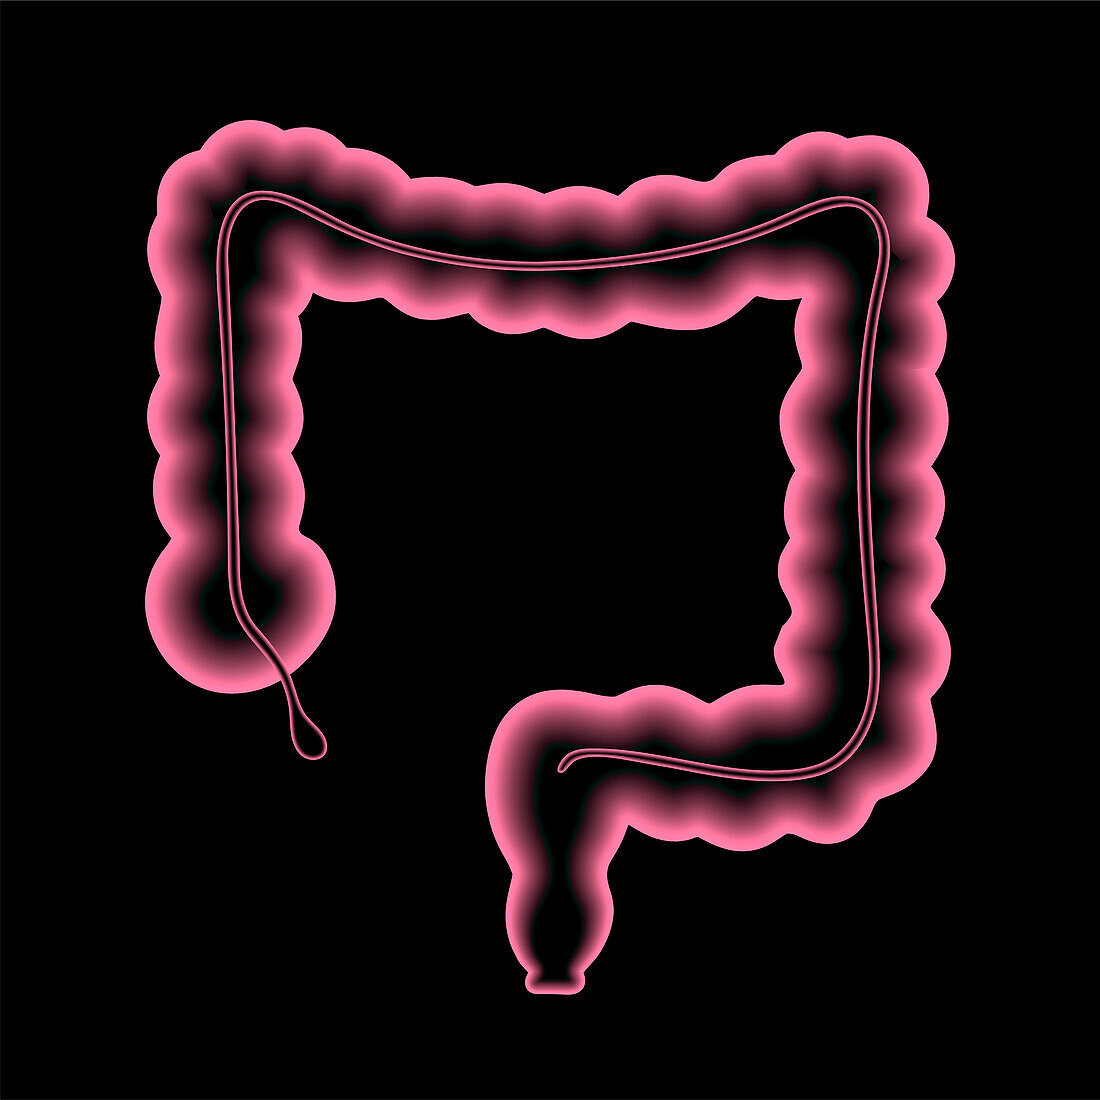 Human intestine, illustration